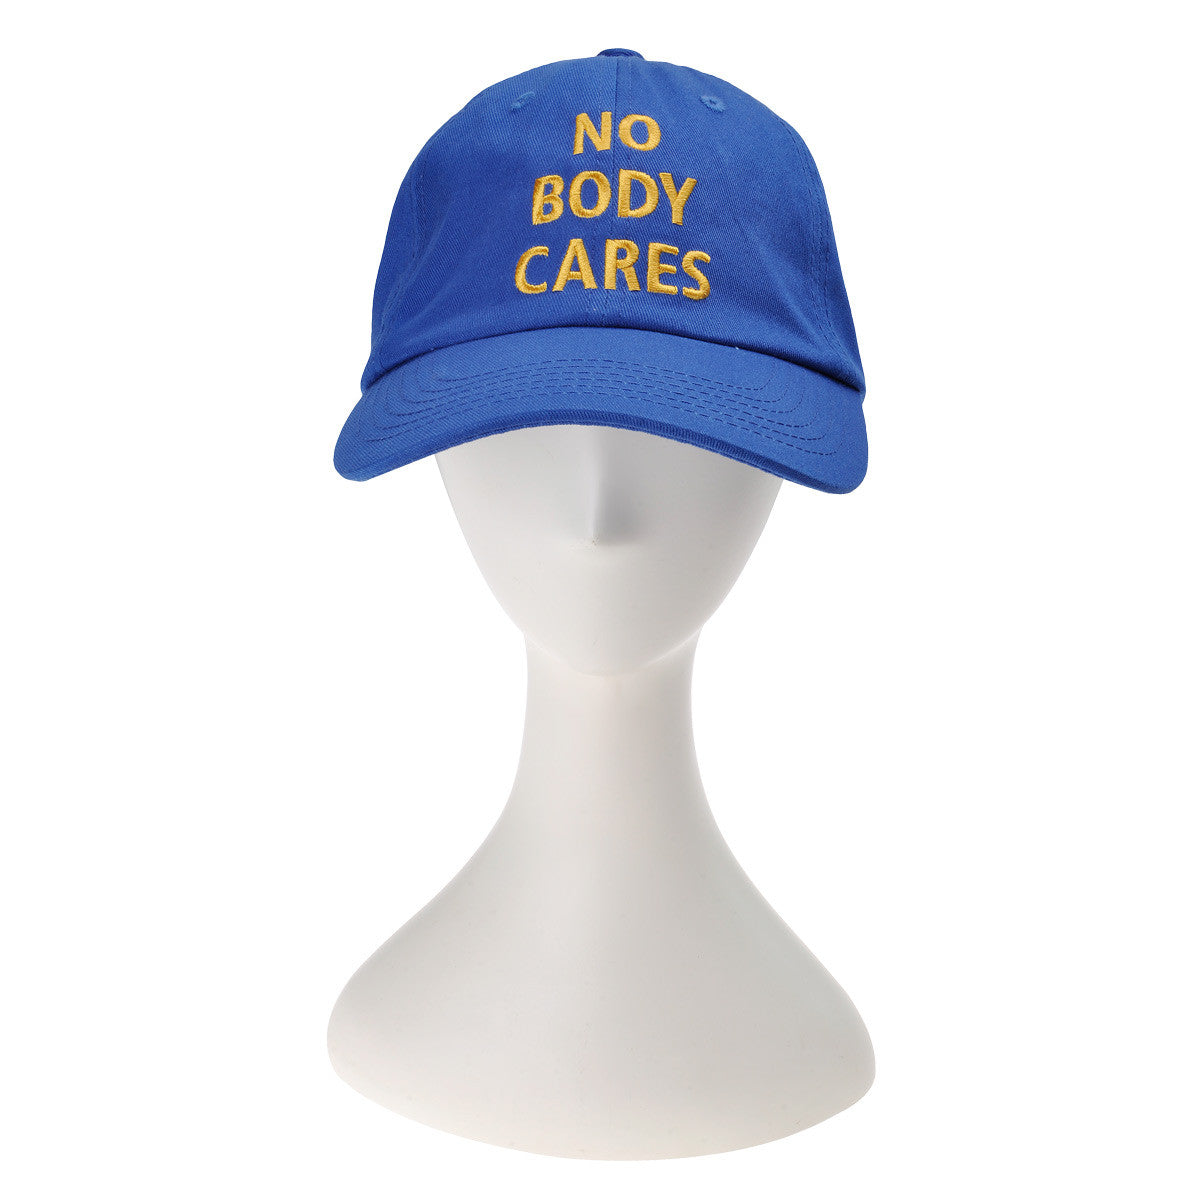 Baseball Cap Adjustable Cotton Caps Fashion Hats Embroidered Hat for Men Women Boys Girls